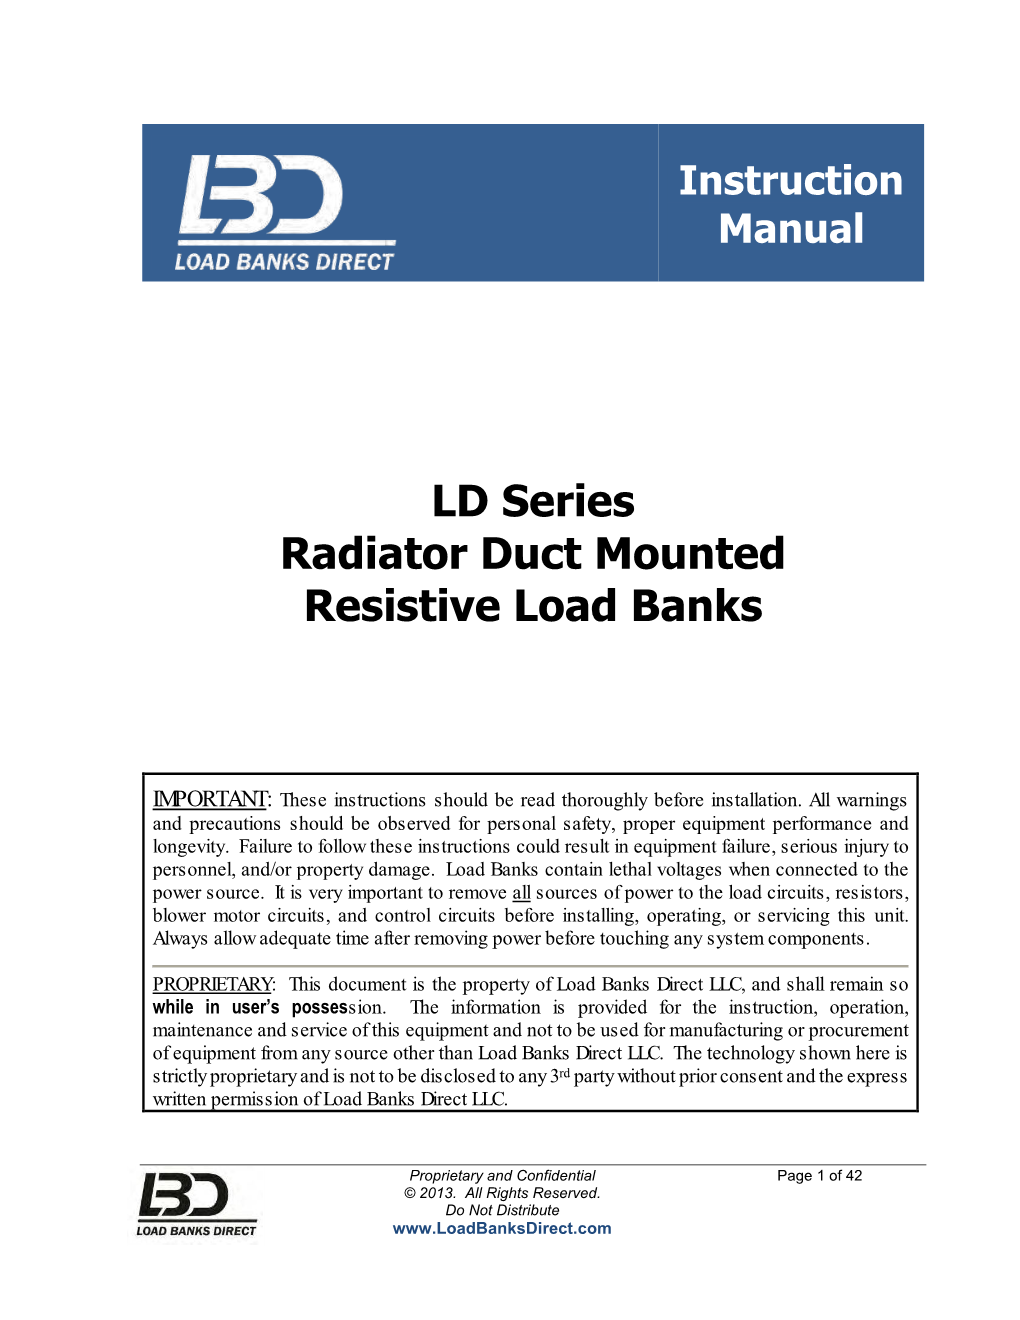 LD Series Radiator Duct Mounted Resistive Load Banks